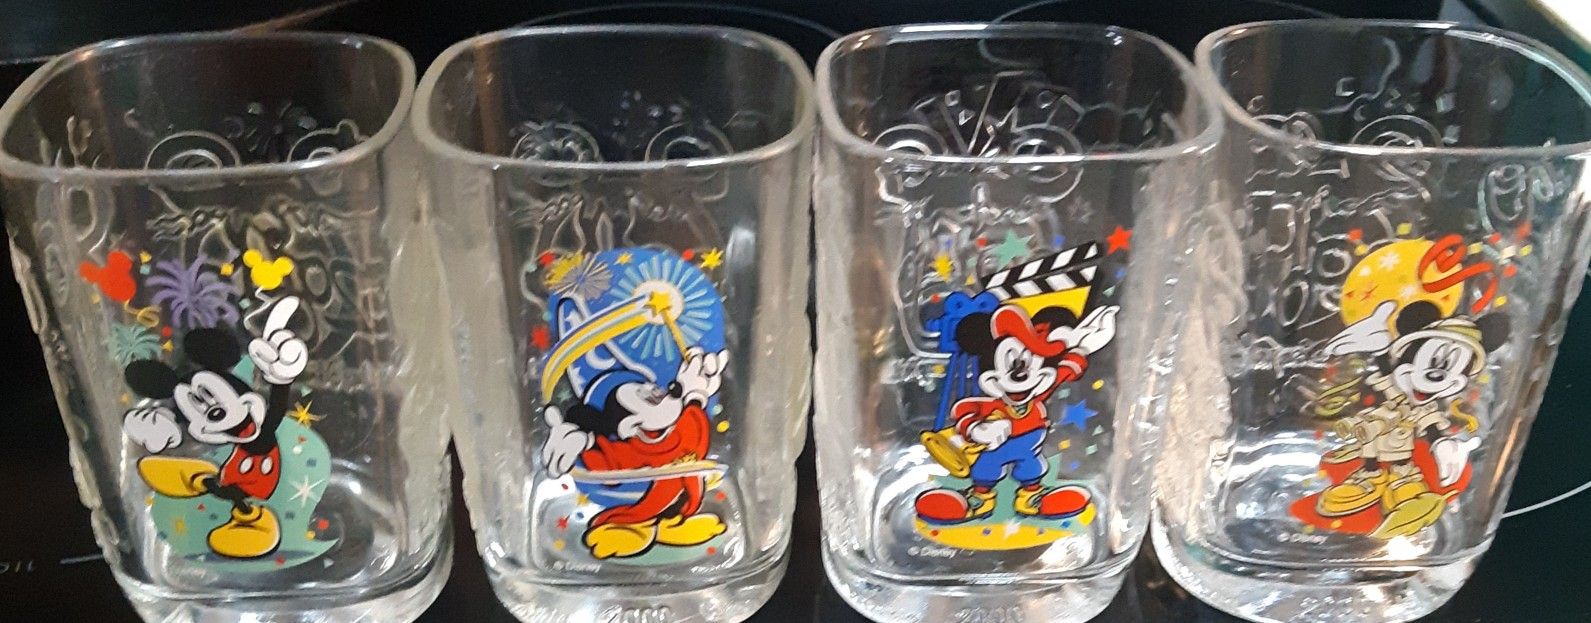 Walt Disney World Collecters Glasses 